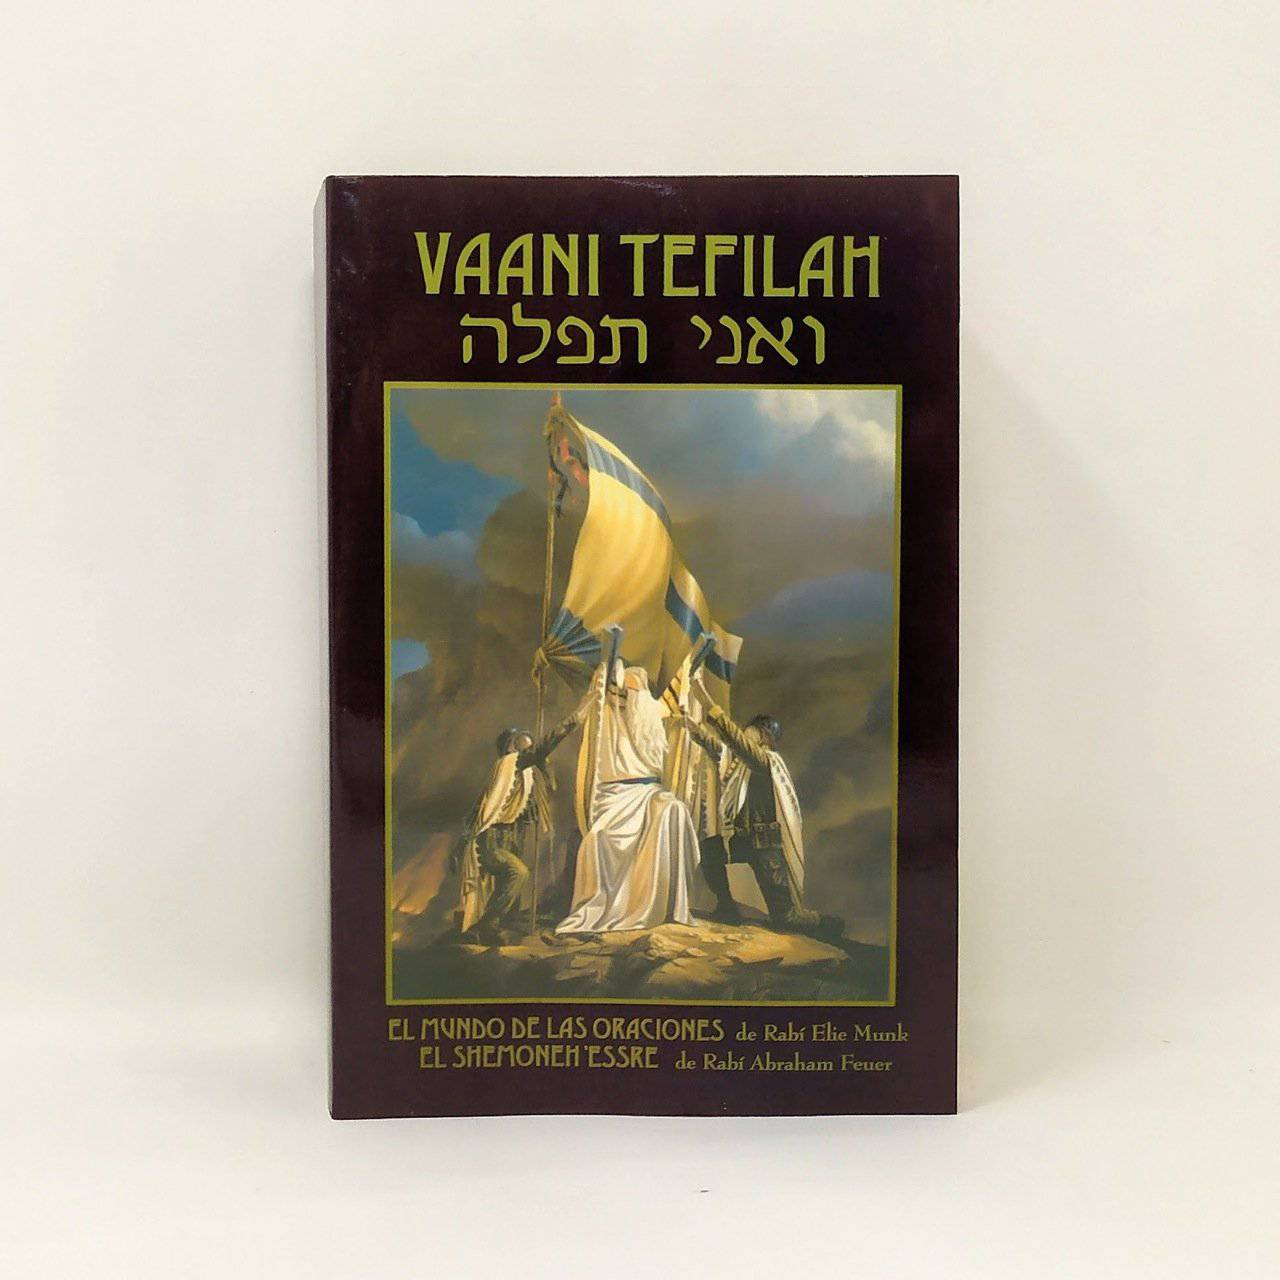 Vaani Tefilah versión bolsillo - Libreria Jerusalem Centro